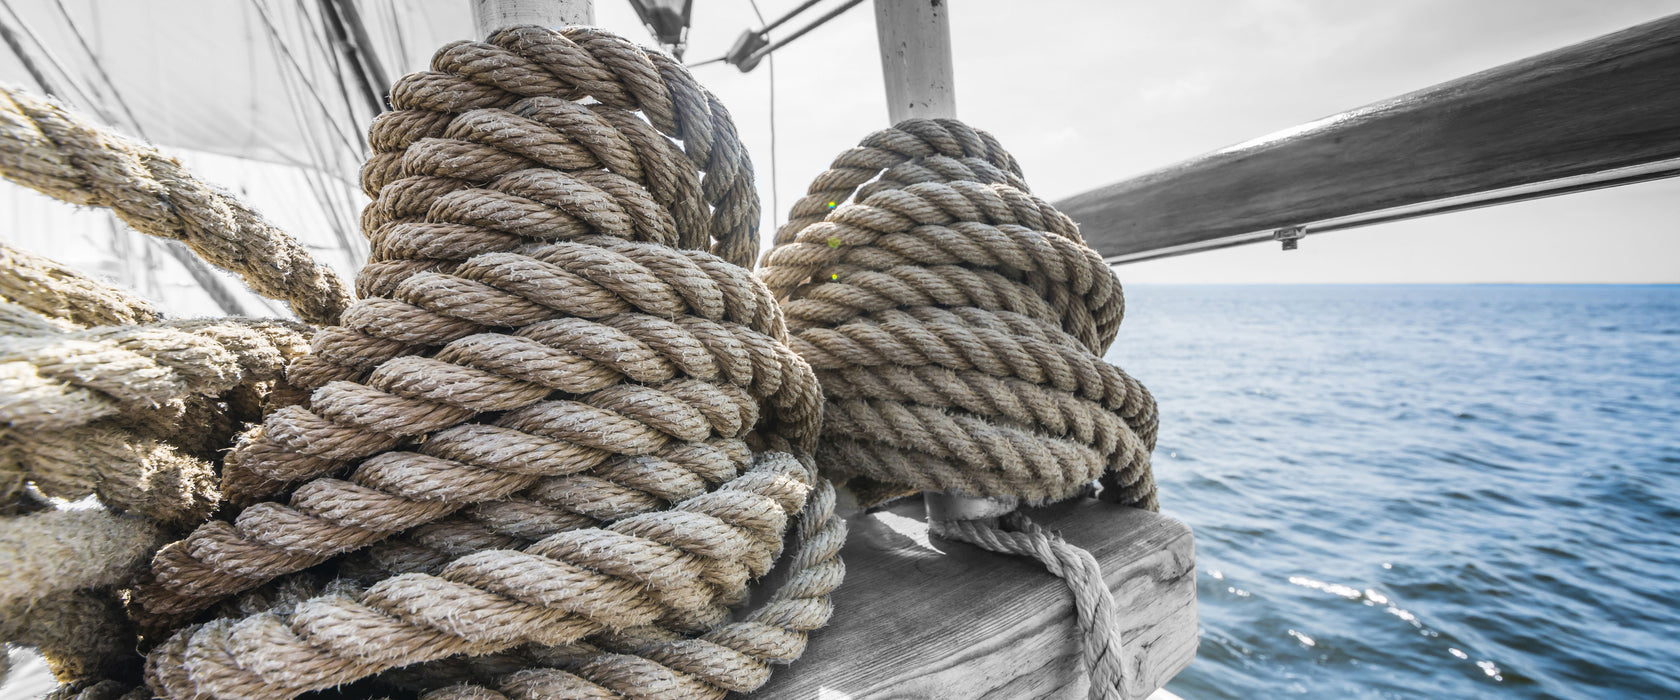 Tau Seile auf einem Schiff, Glasbild Panorama